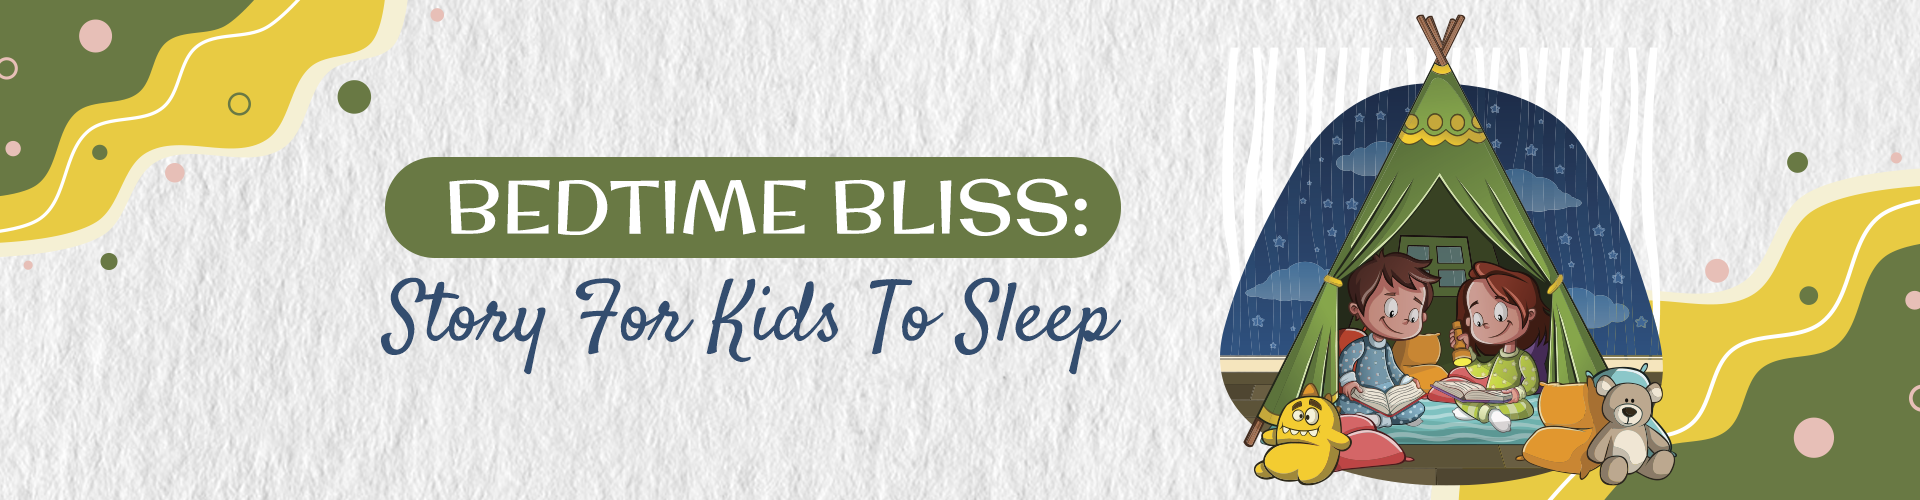 Bedtime Bliss: Story For Kids To Sleep